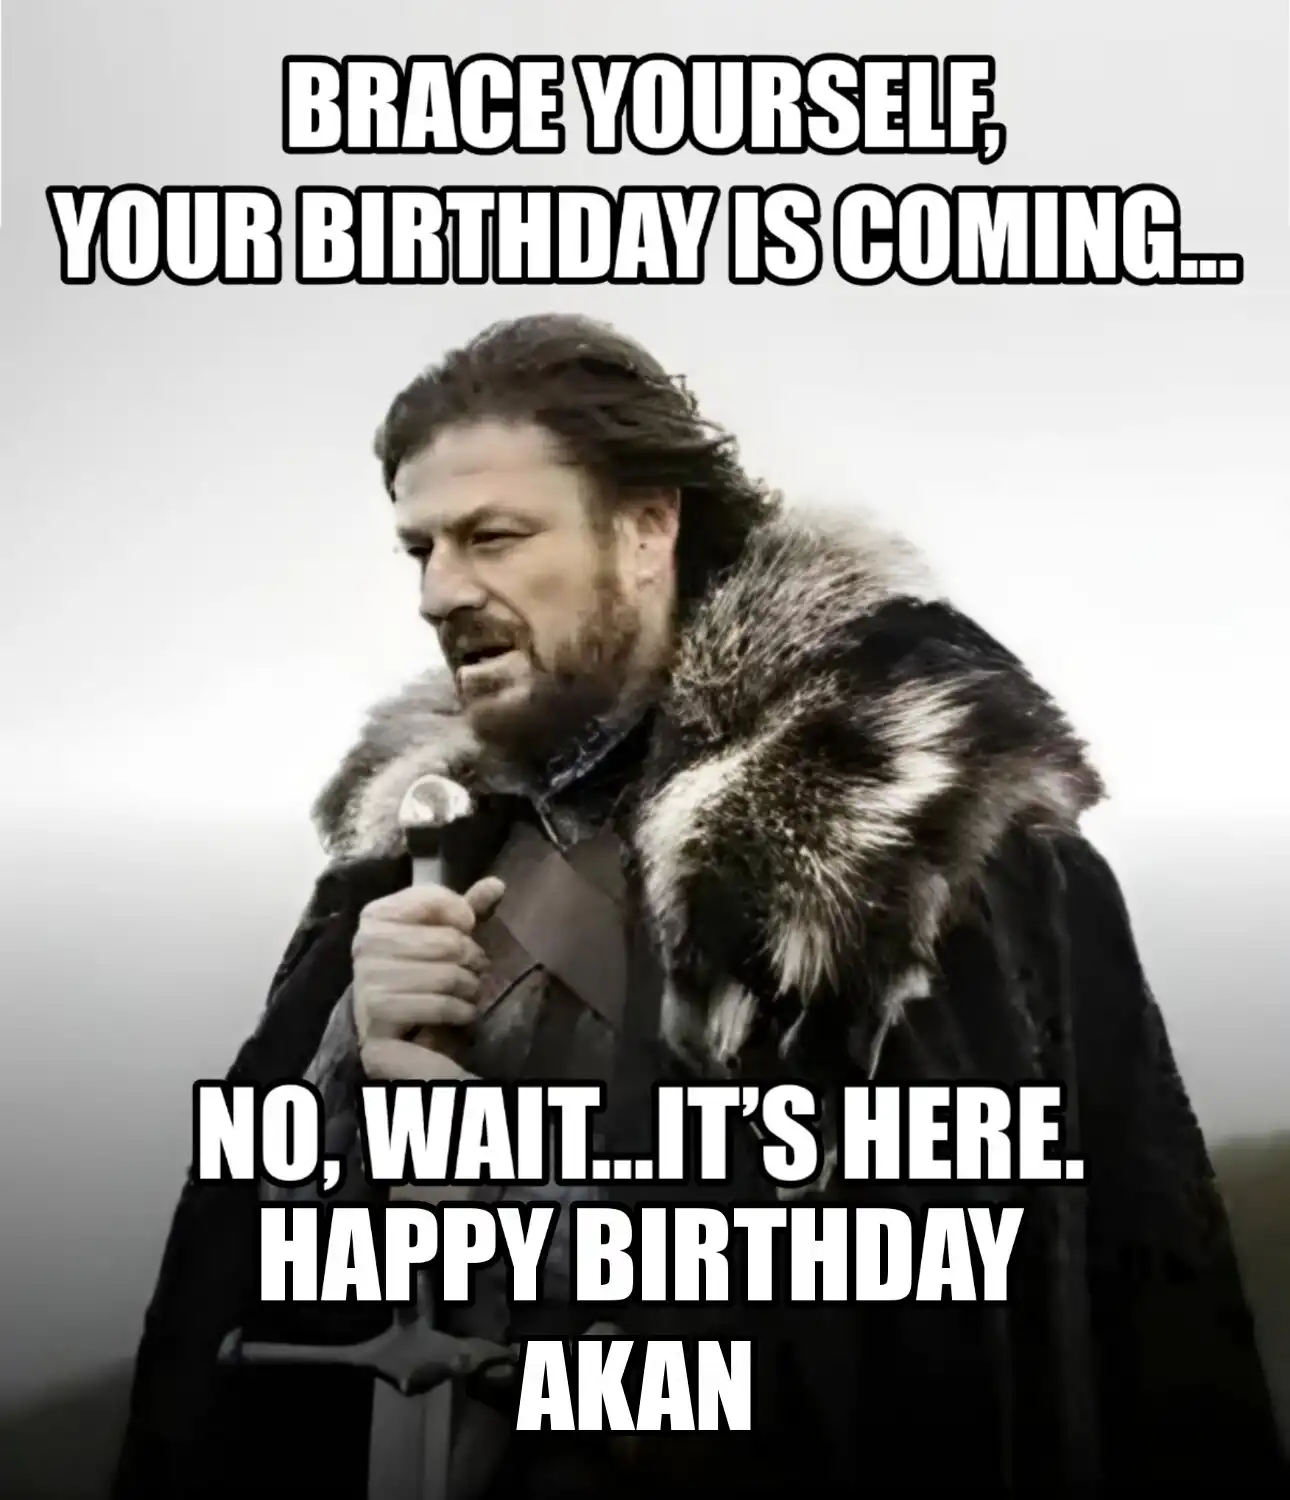 Happy Birthday Akan Brace Yourself Your Birthday Is Coming Meme